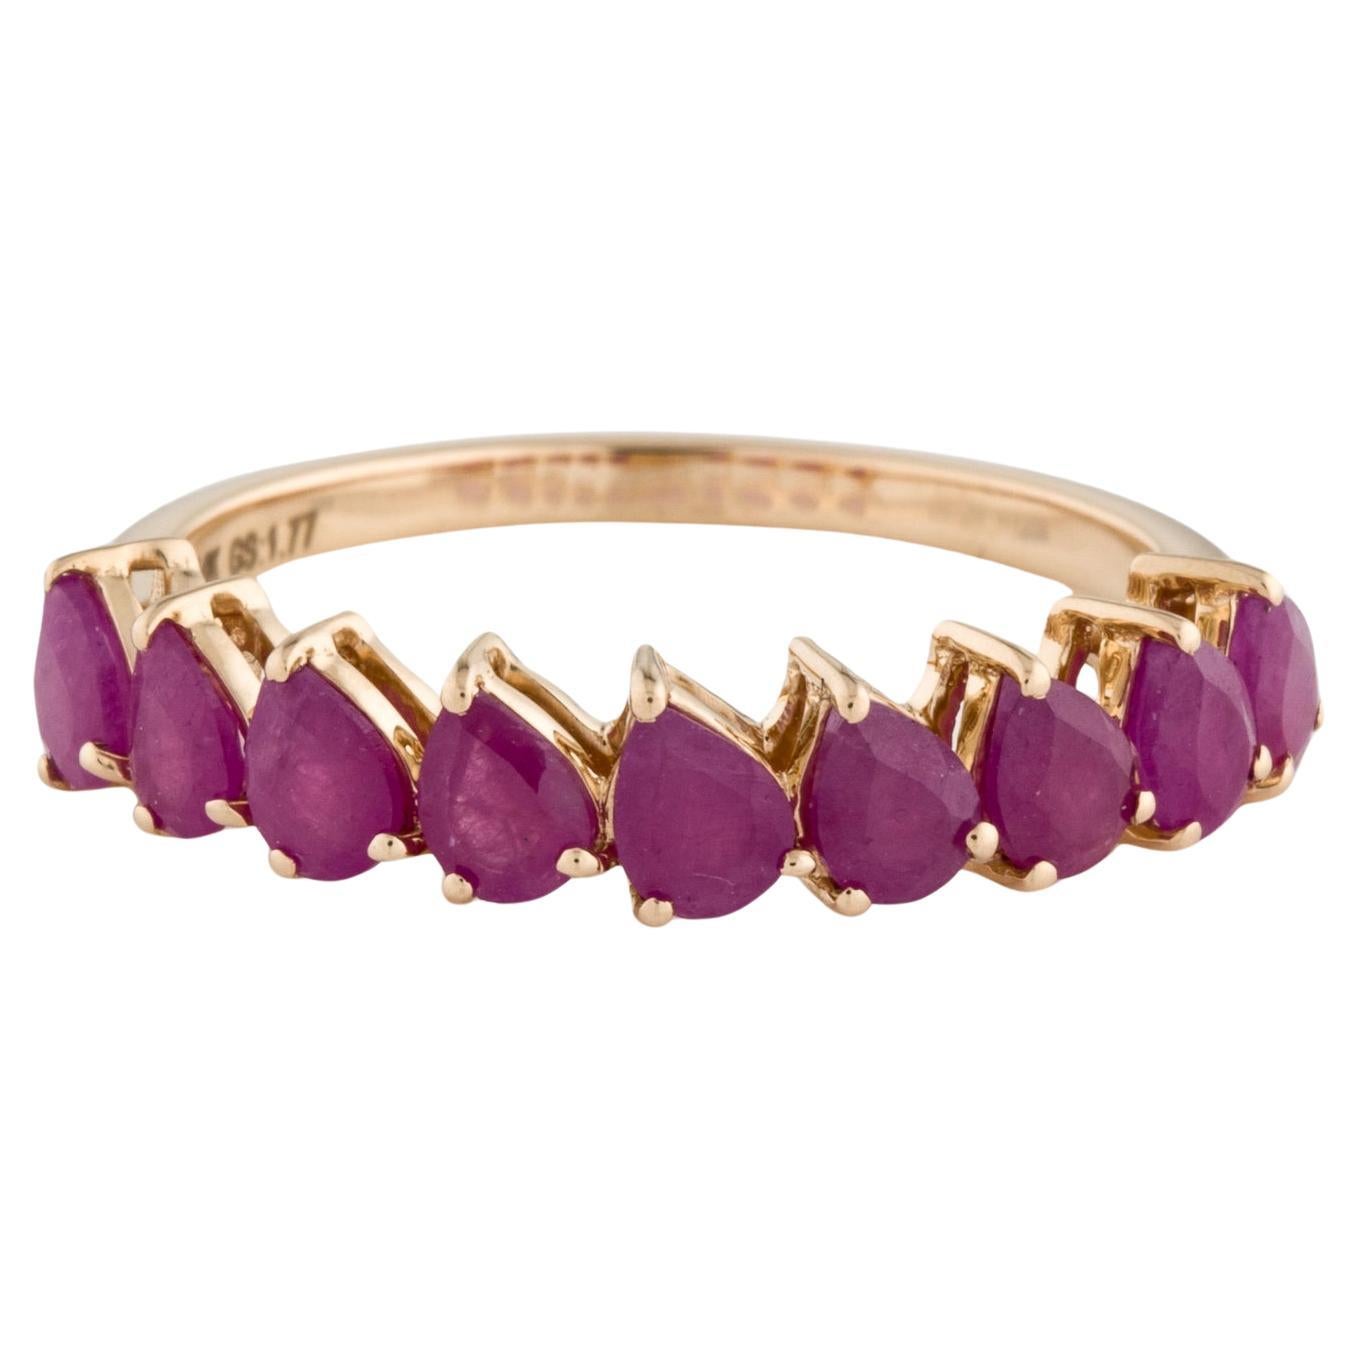 Stunning 14K Ruby Band Ring with 1.77ctw Gemstones - Size 8  Elegant & Vintage